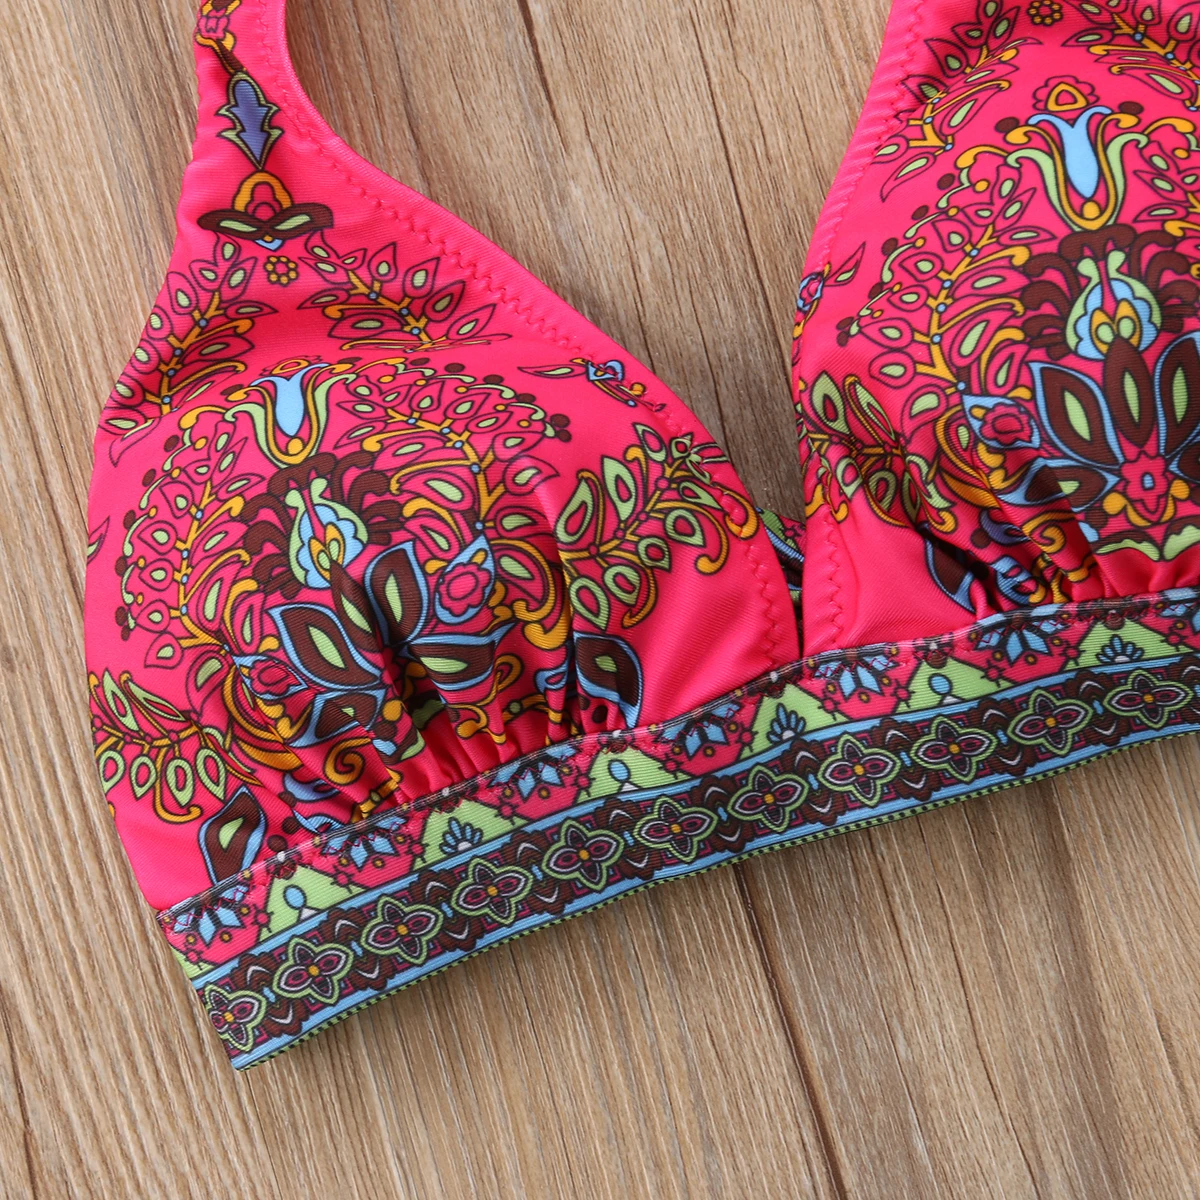 2019 nuevo Bikini estampado Floral para mujer conjunto push-up traje de baño vendaje traje de baño Monokini ropa de playa